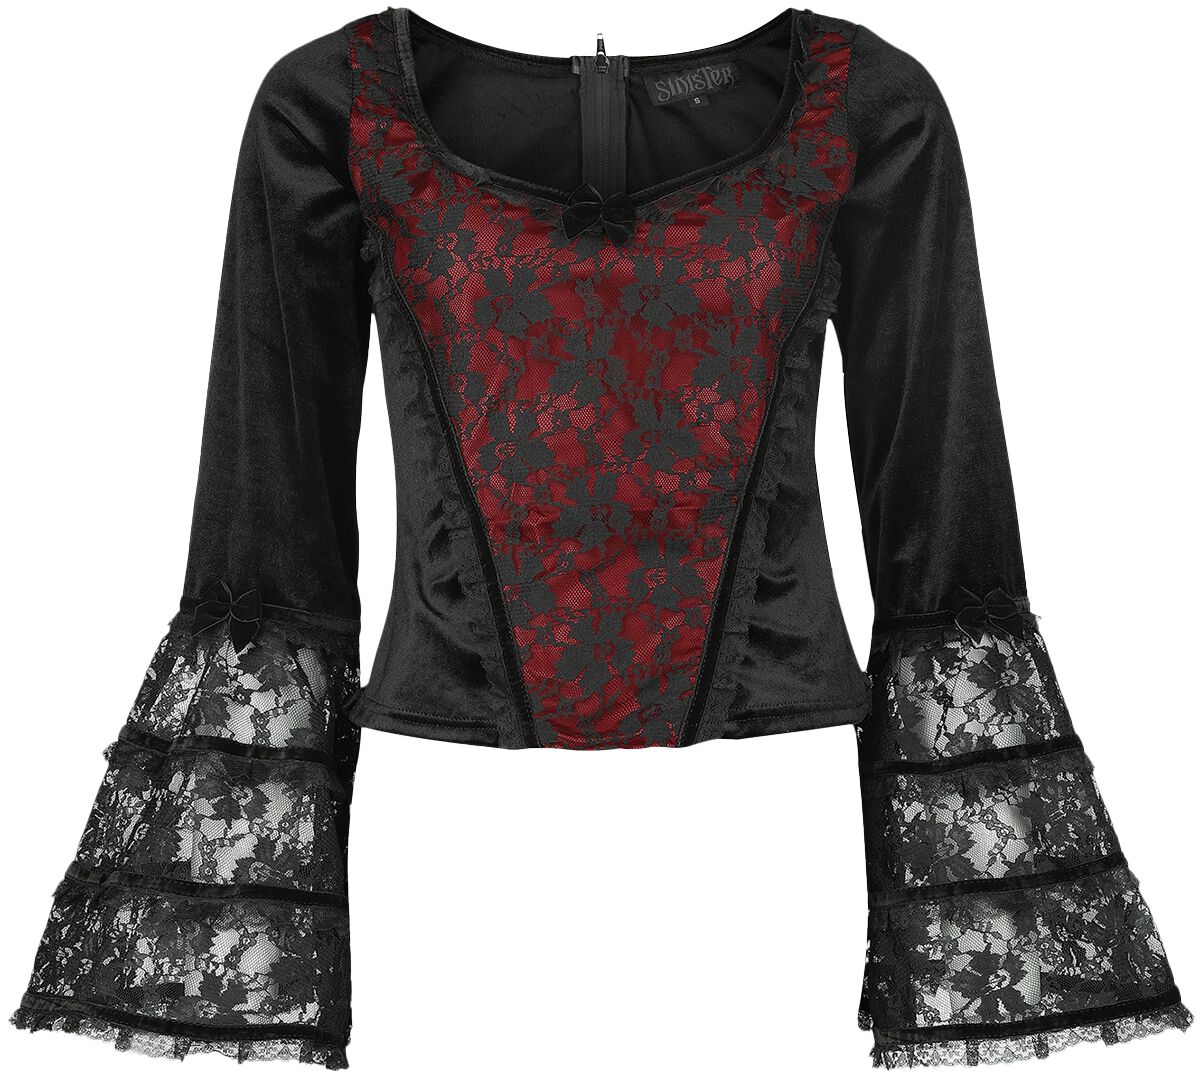 Sinister Gothic Gothic Longsleeve Langarmshirt schwarz rot in XL